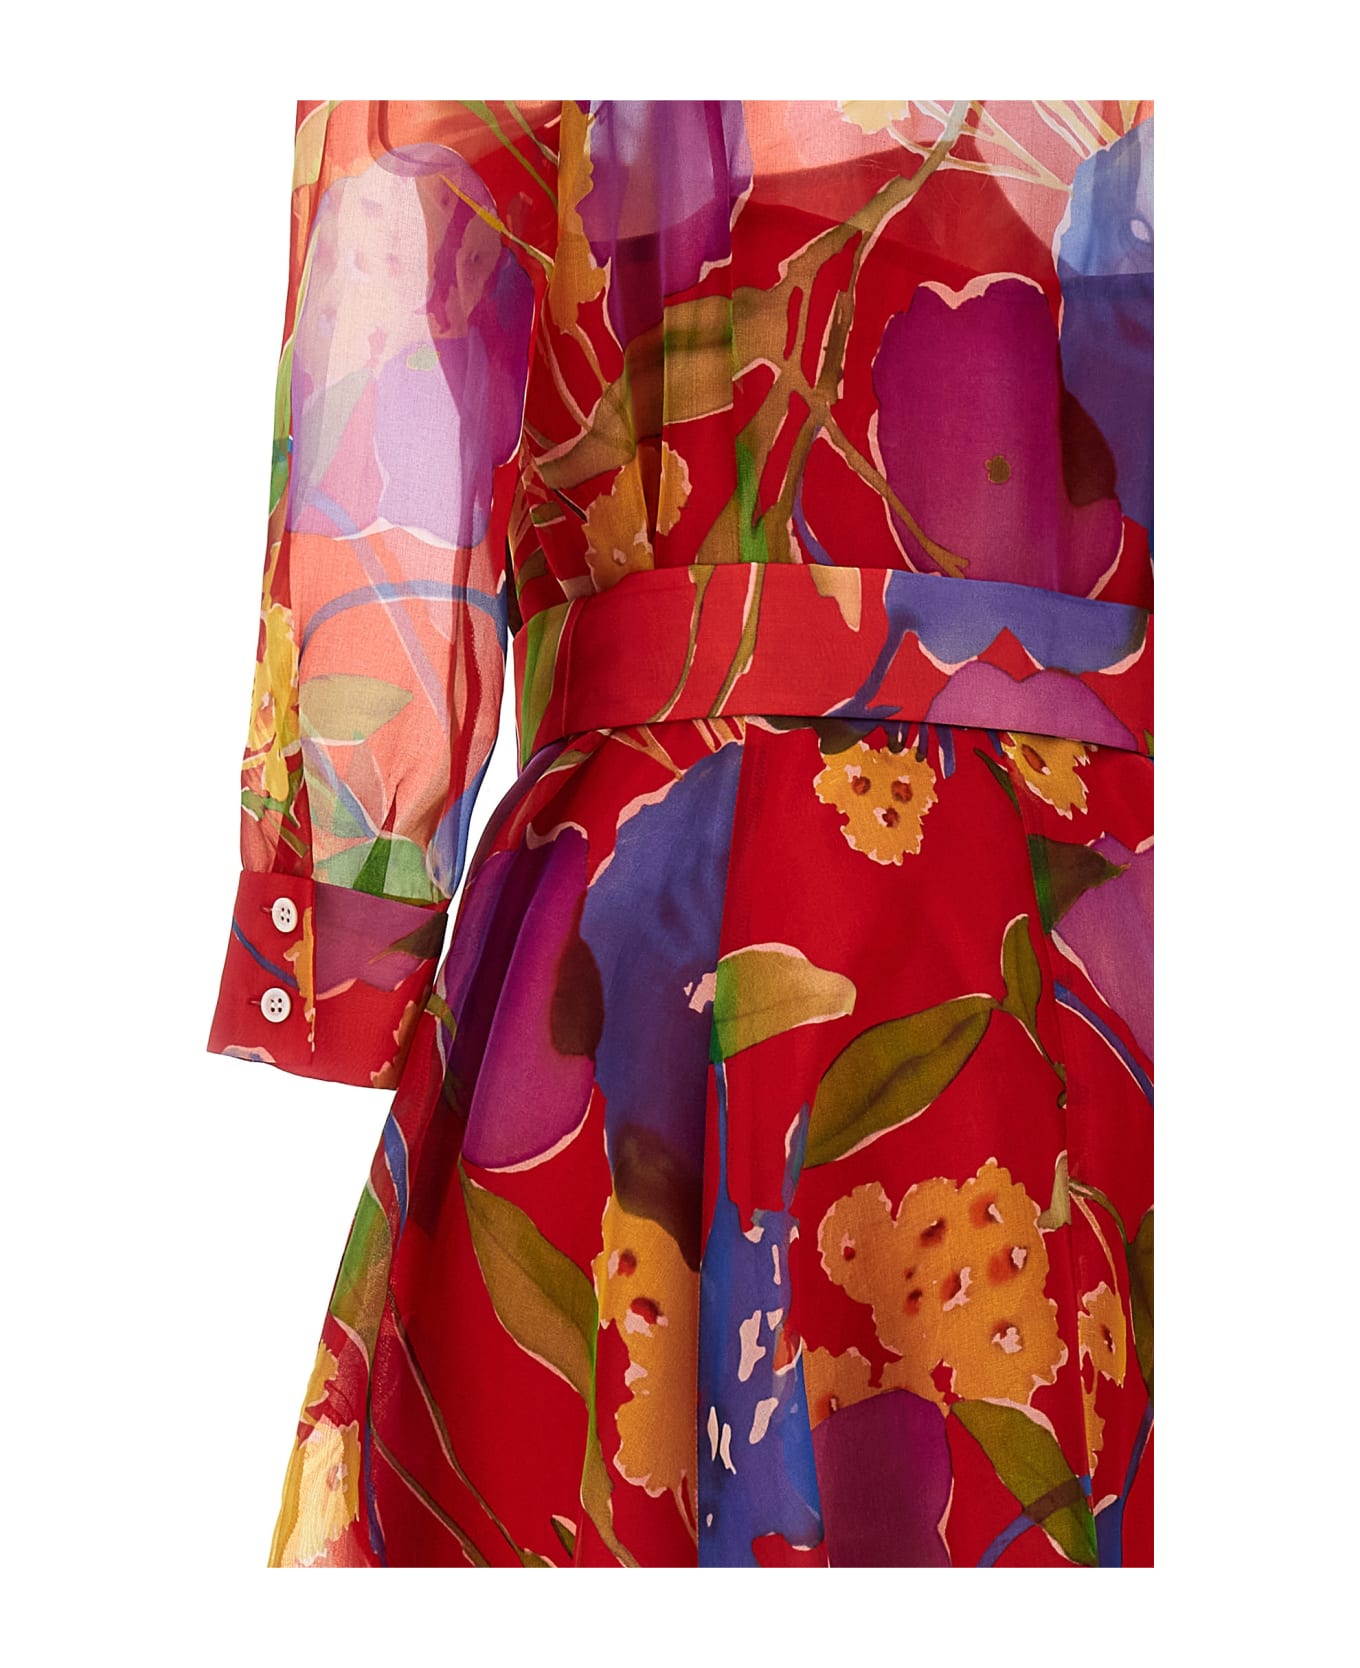 Carolina Herrera Floral Evening Dress - Multicolor